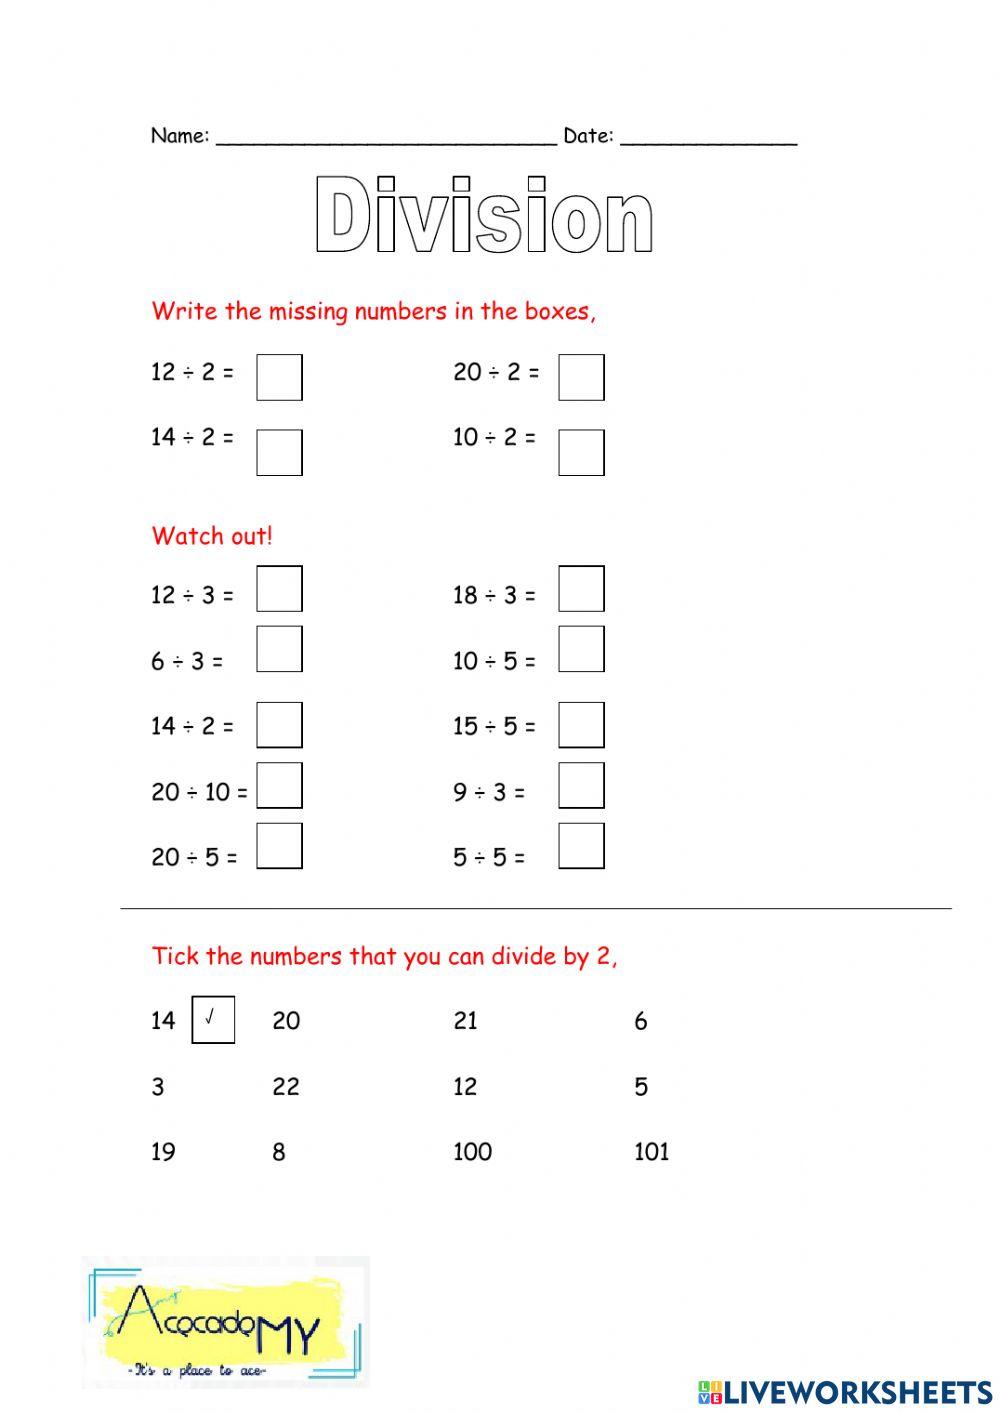 Division 2